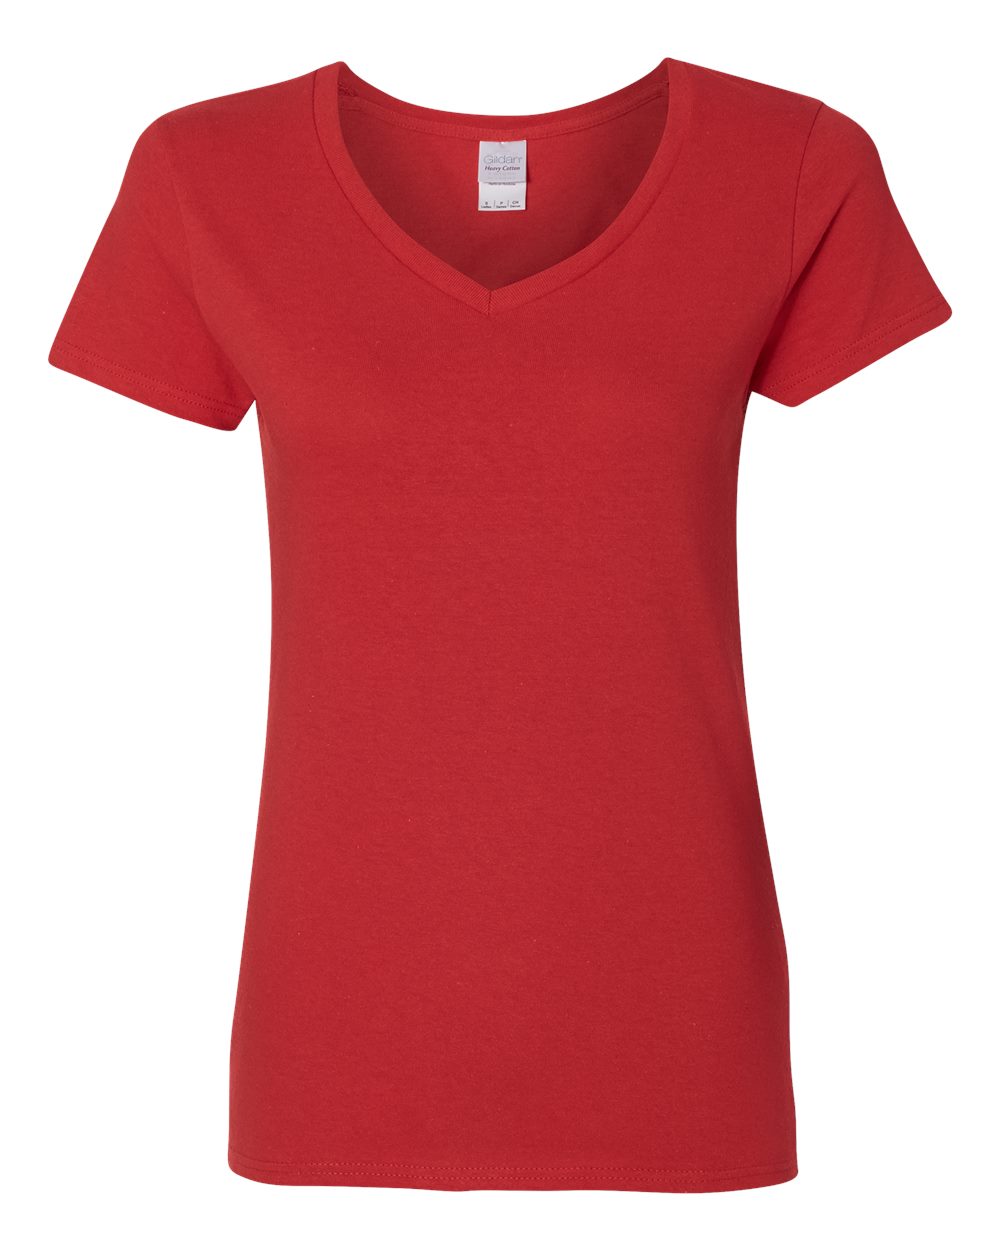 IWPF - Women's T-Shirt V-Neck Short Sleeve - Las Vegas Nevada - image 2 of 5